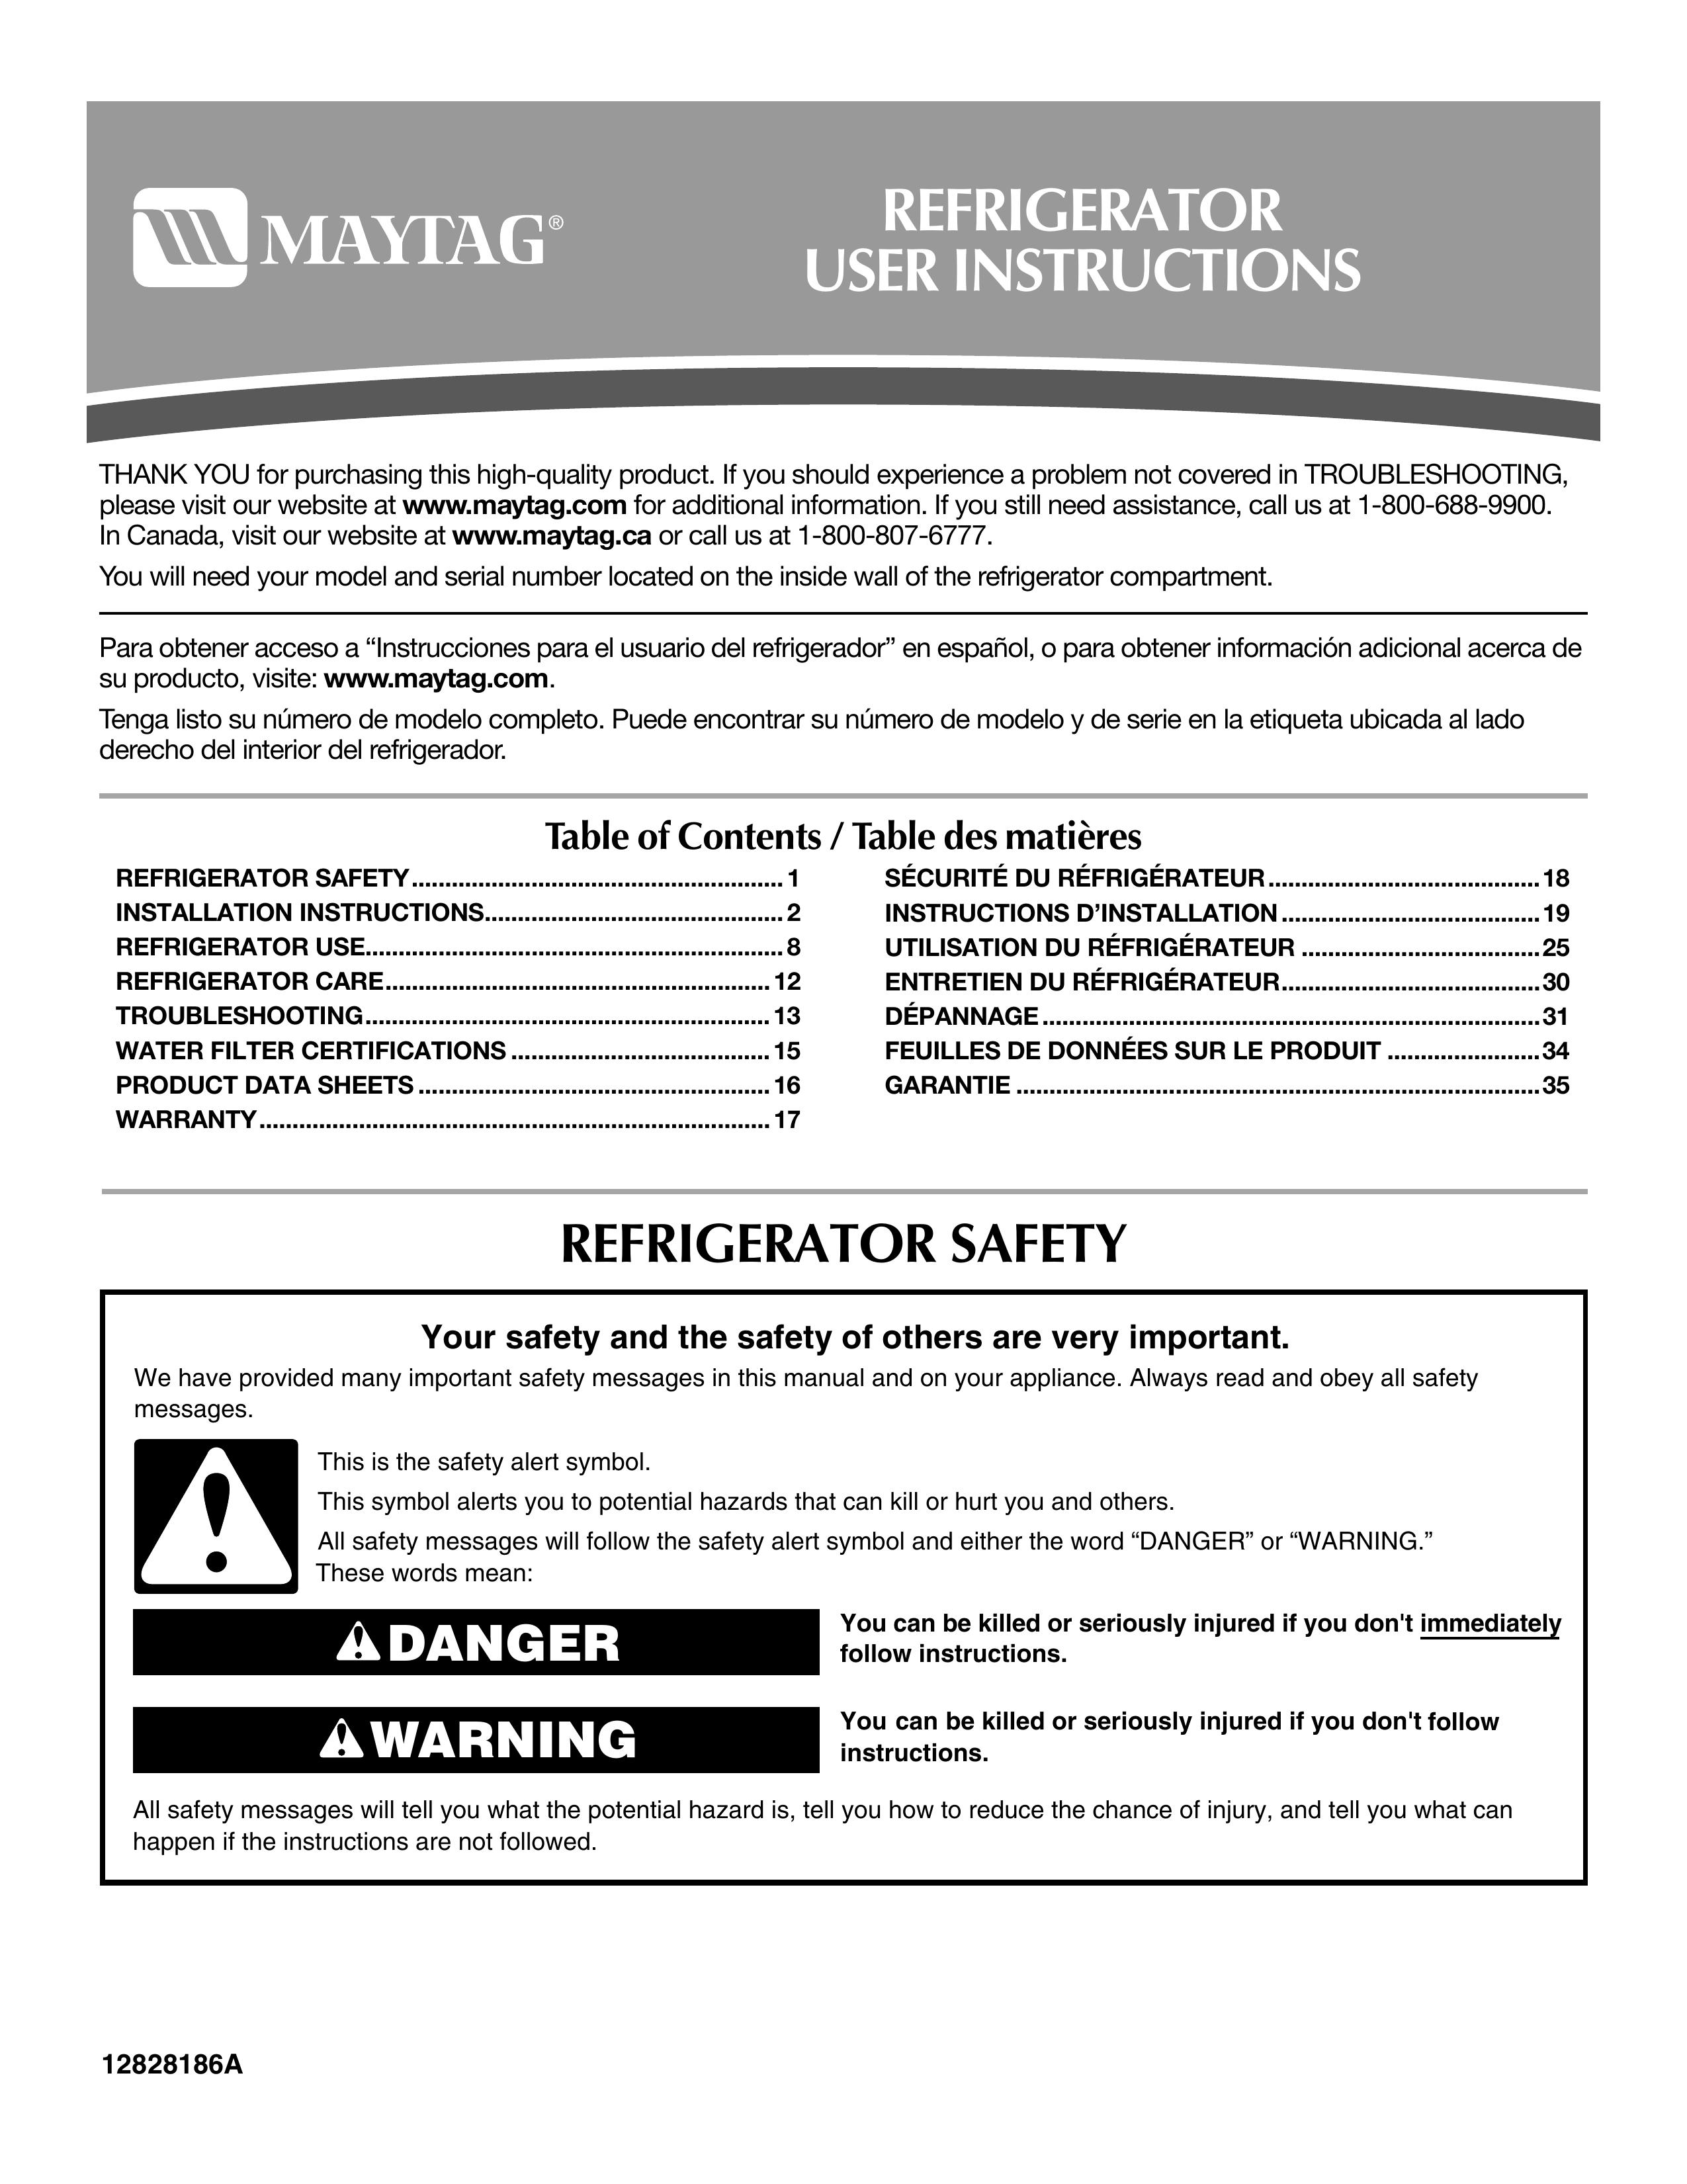 Maytag 12828190A Refrigerator User Manual